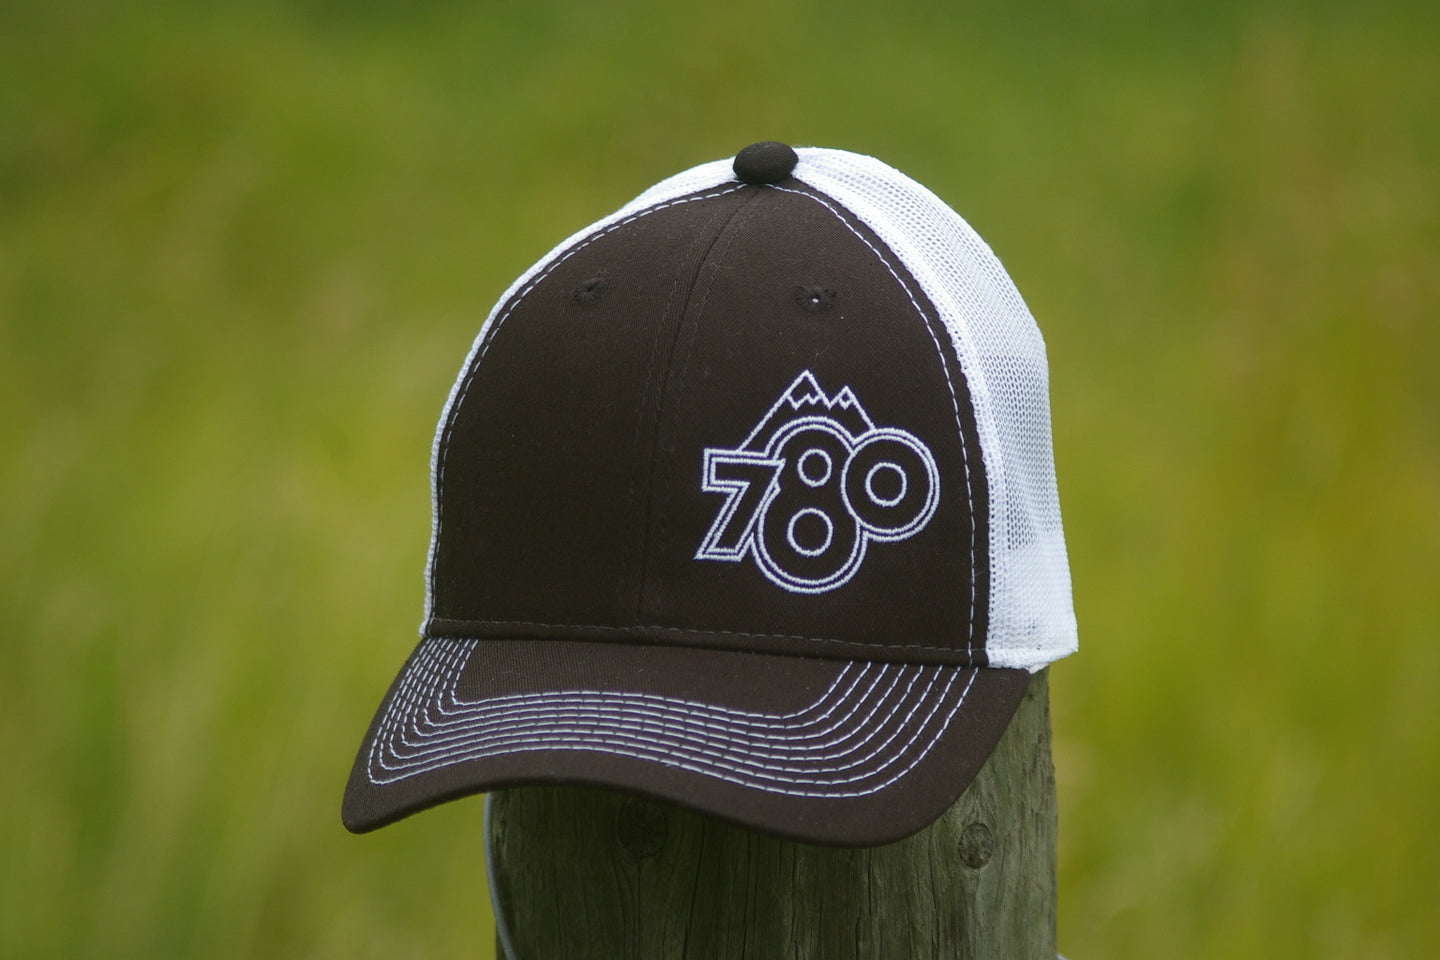 Classic 780 Clothing Company hat - Black